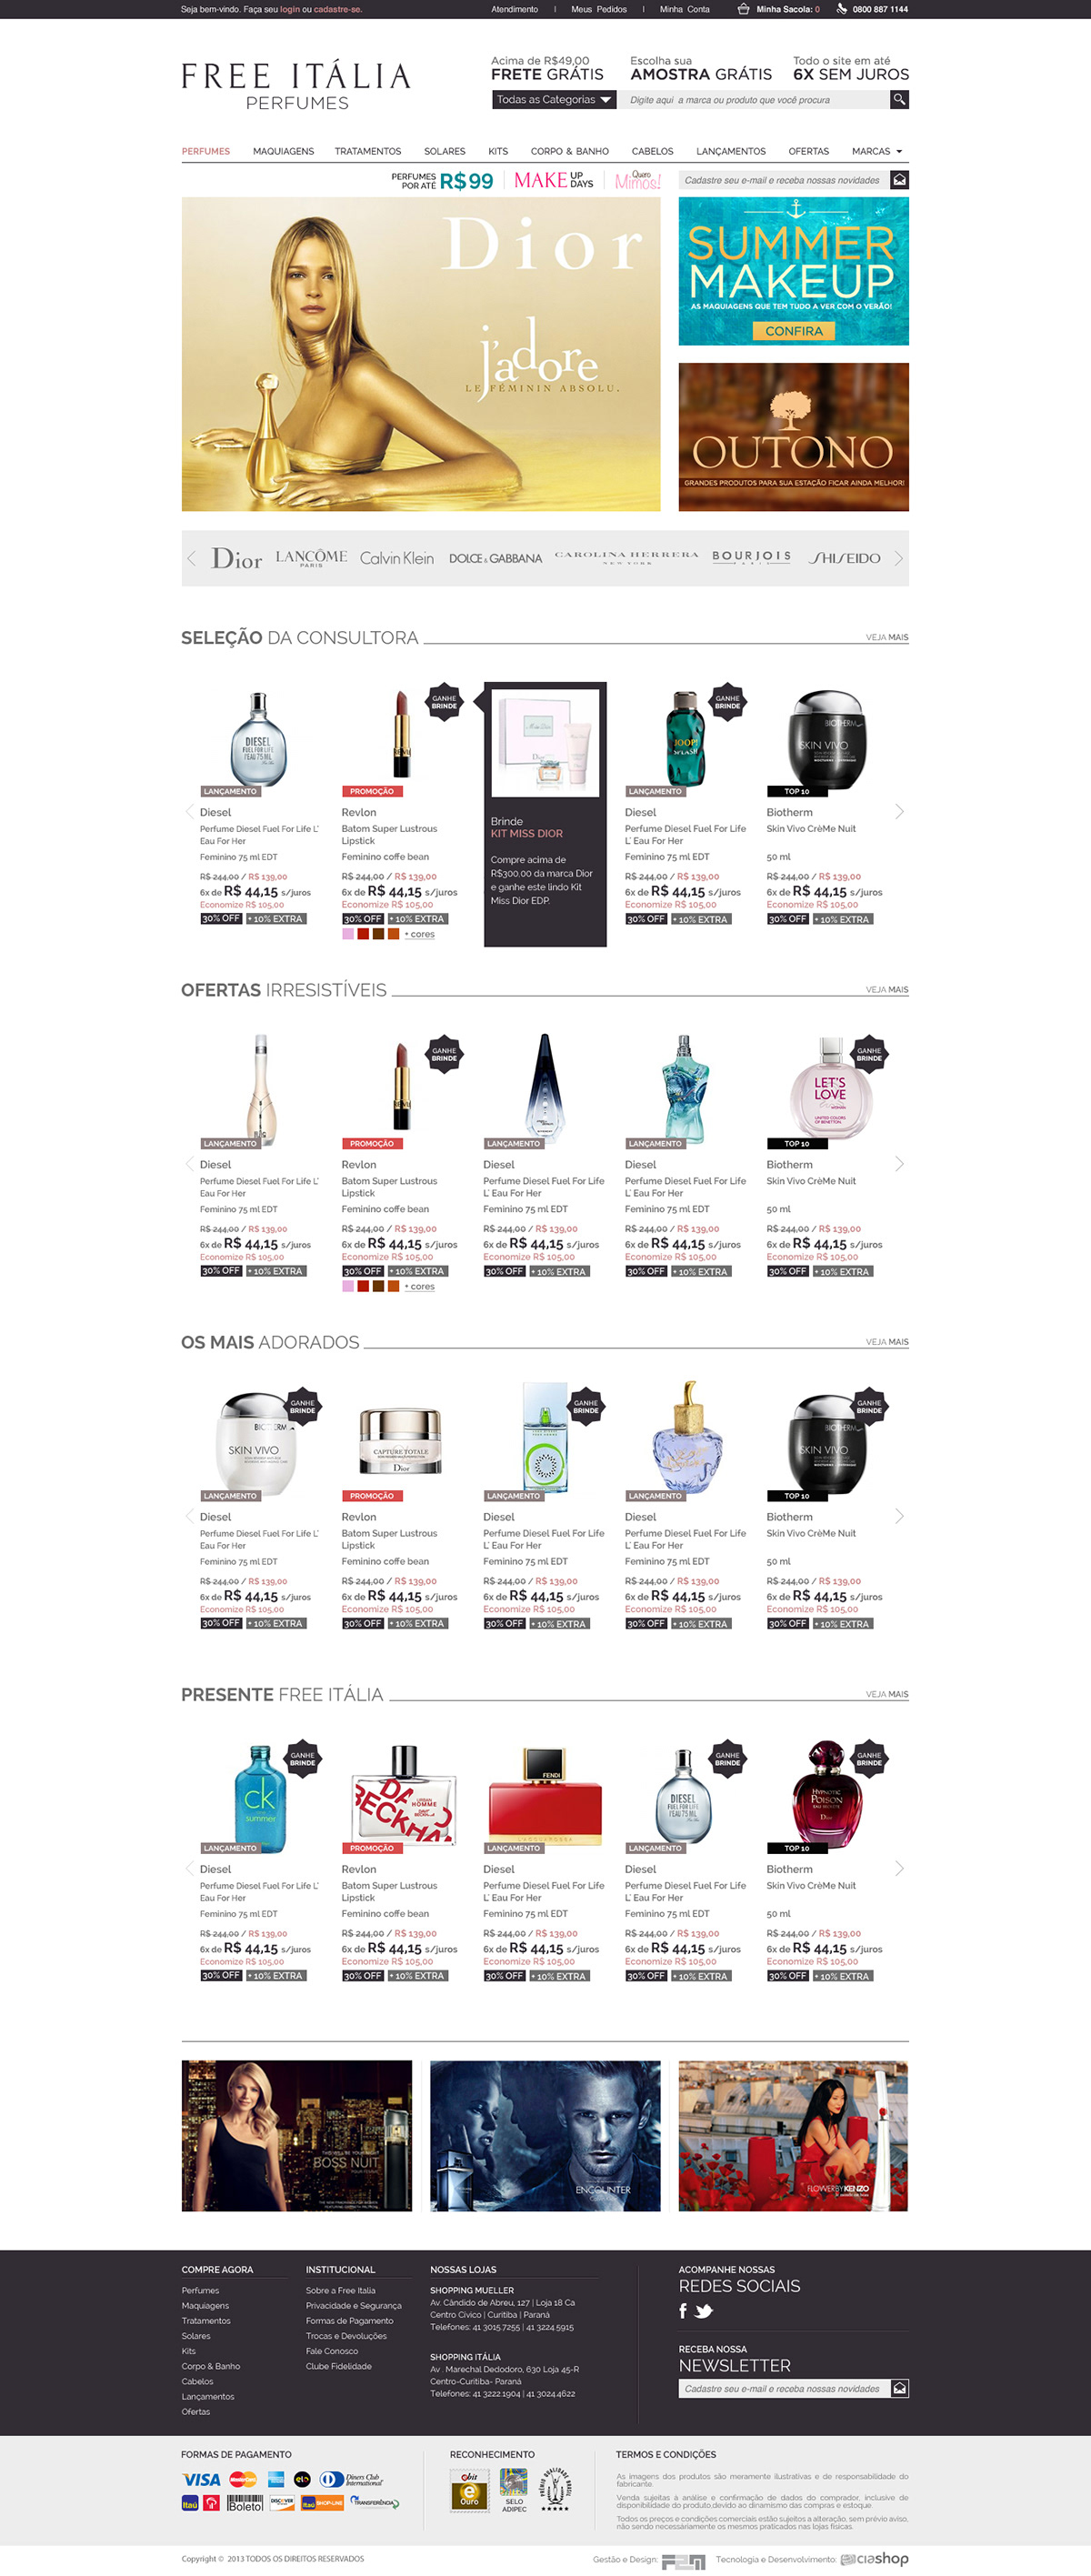 e-shop e-commerce cosmetics Free Itália perfume beauty care